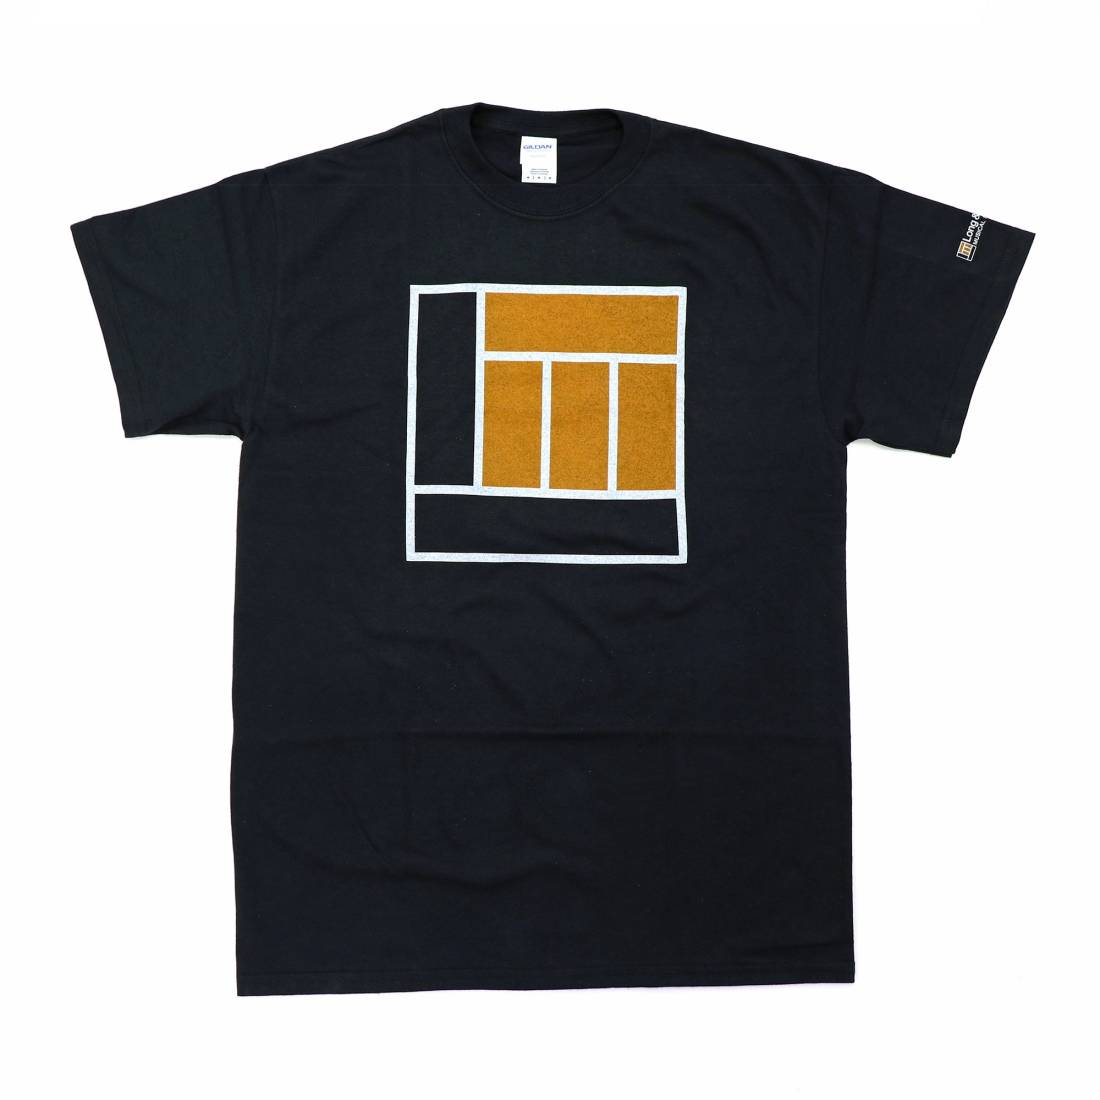 Long & Mcquade Logo T-Shirt - Black, Medium